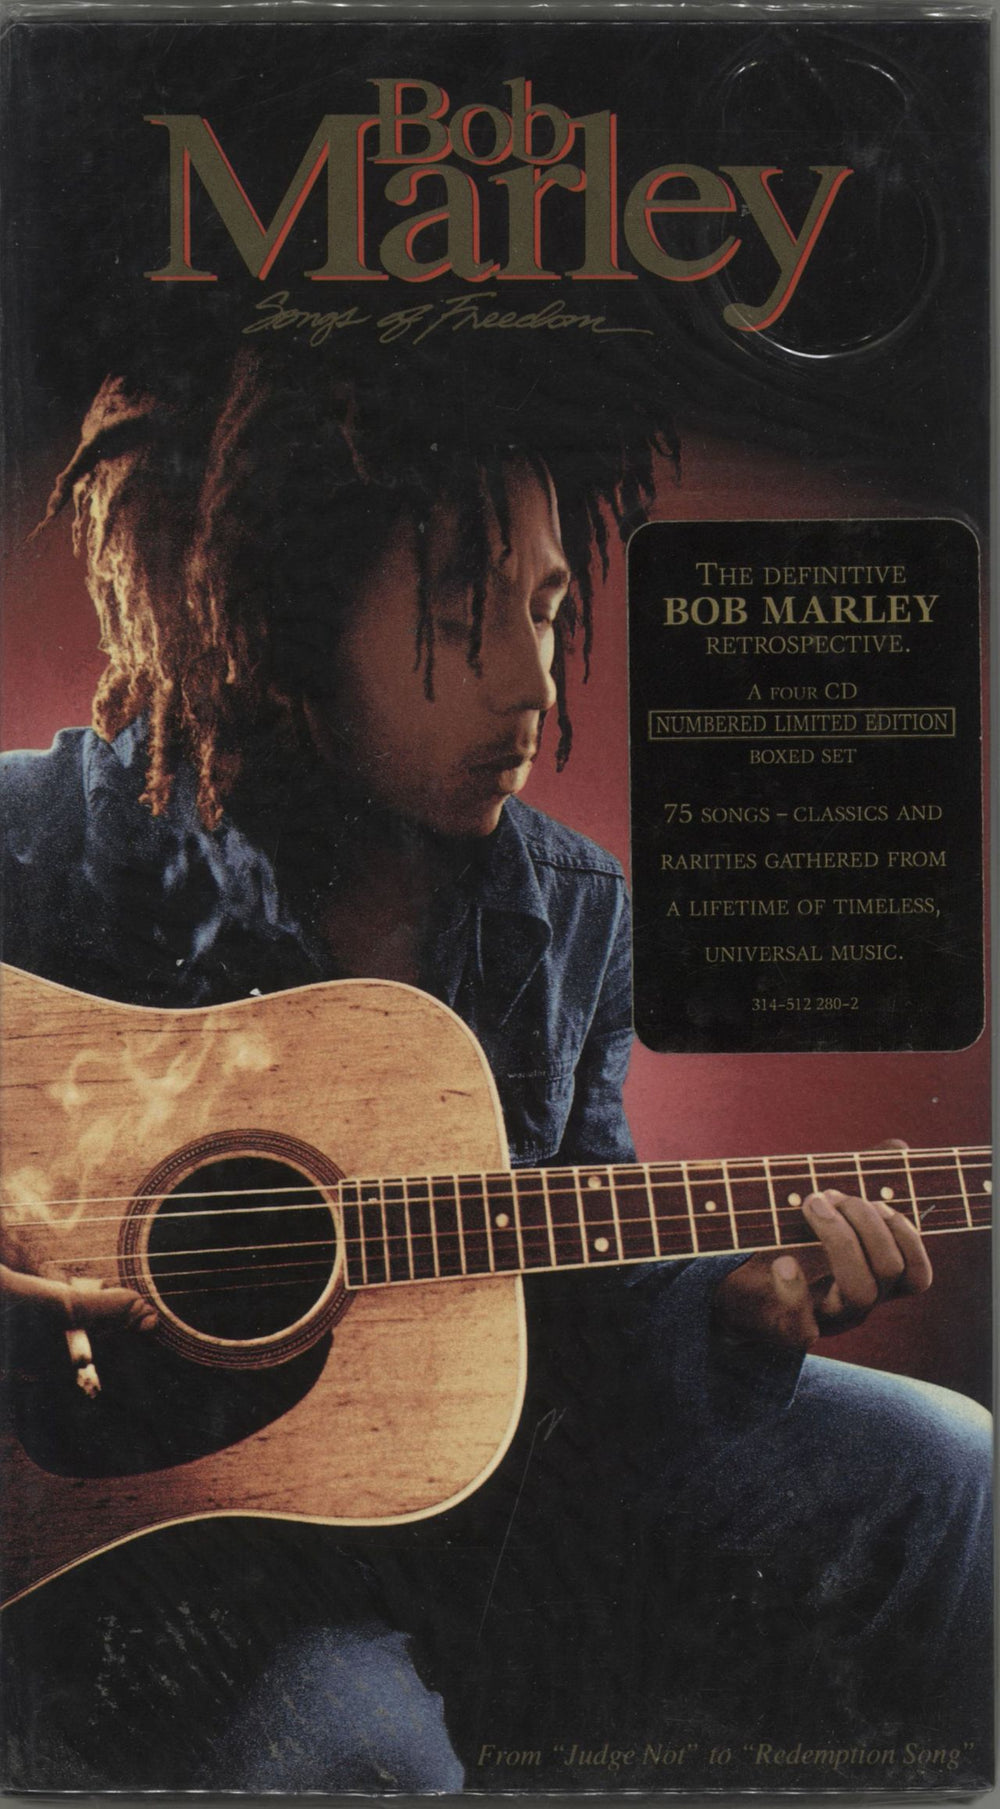 Bob Marley & The Wailers Songs Of Freedom - Sealed UK Cd album box 